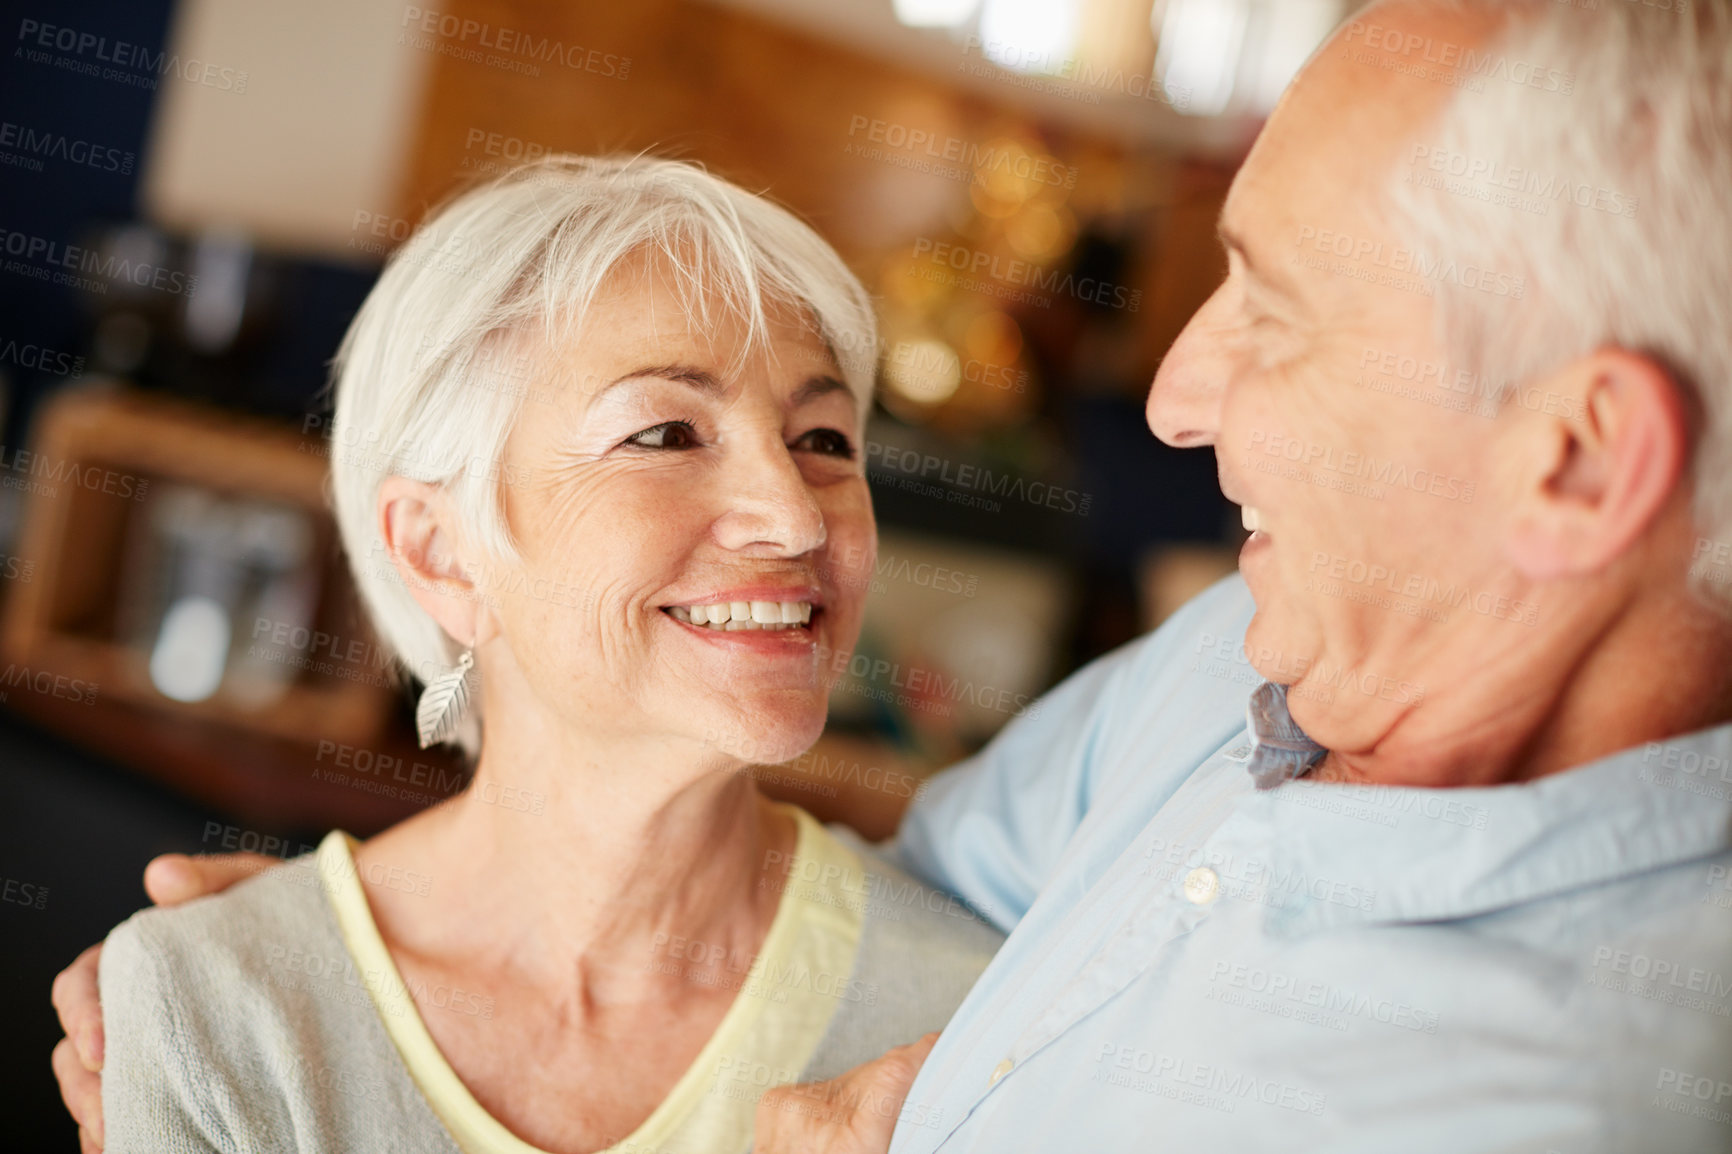 Buy stock photo Shot of a happy senior couple